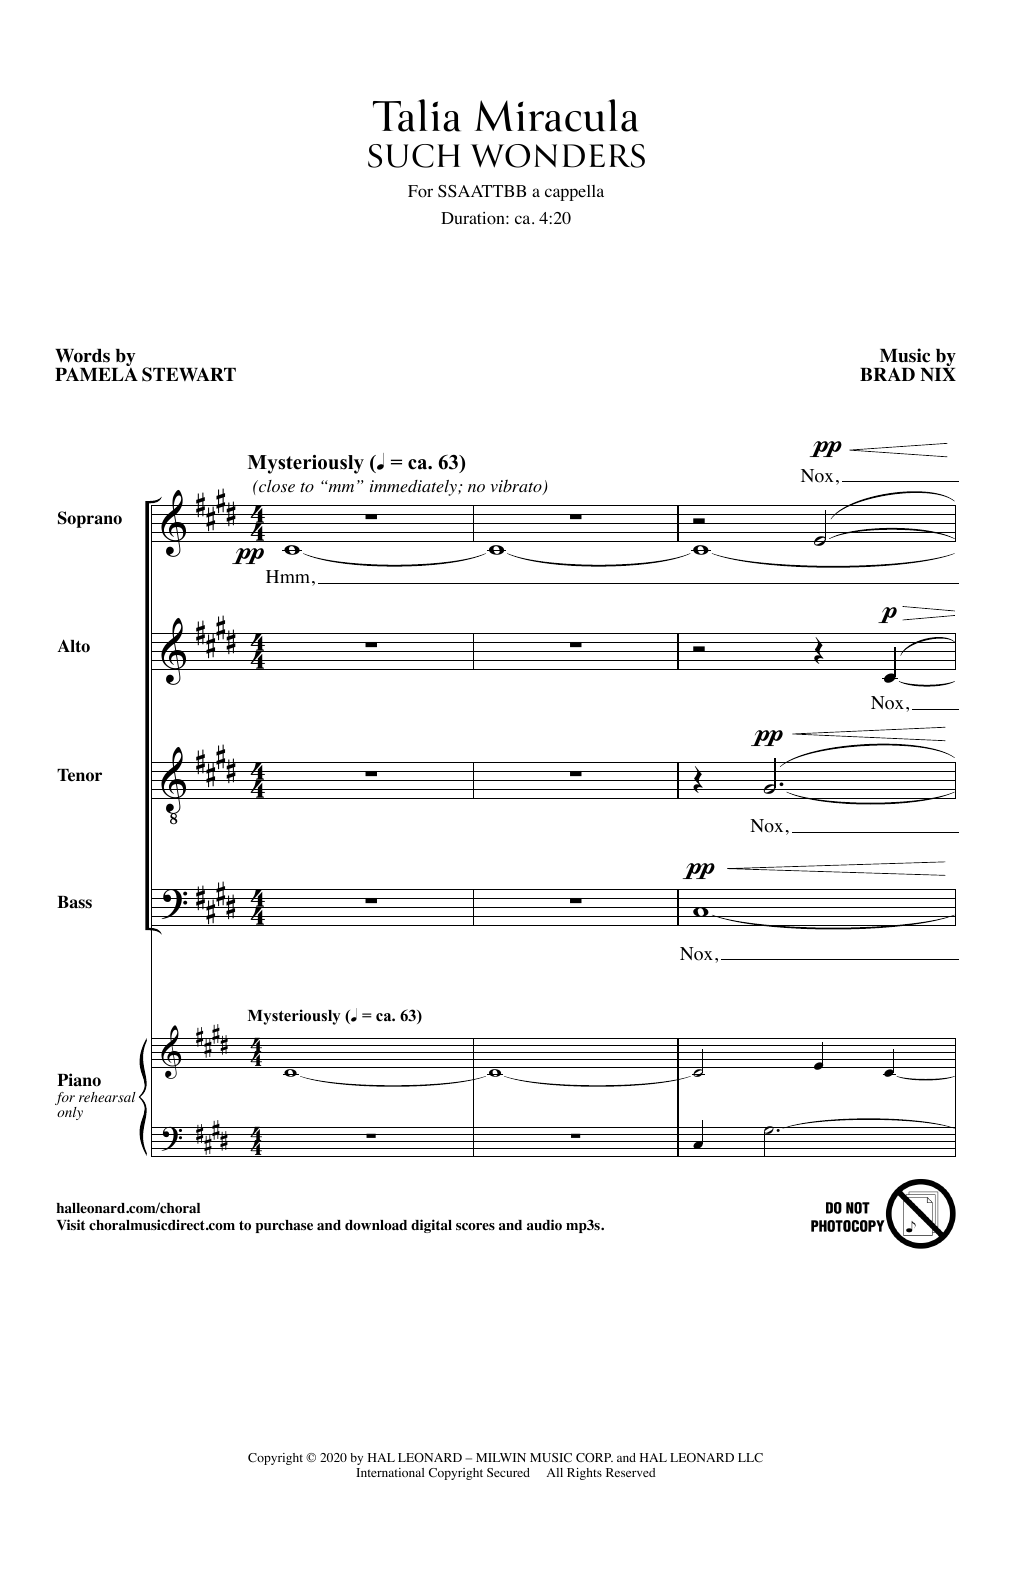 Pamela Stewart and Brad Nix Talia Miracula (Such Wonders) sheet music notes and chords arranged for SSAATTBB Choir